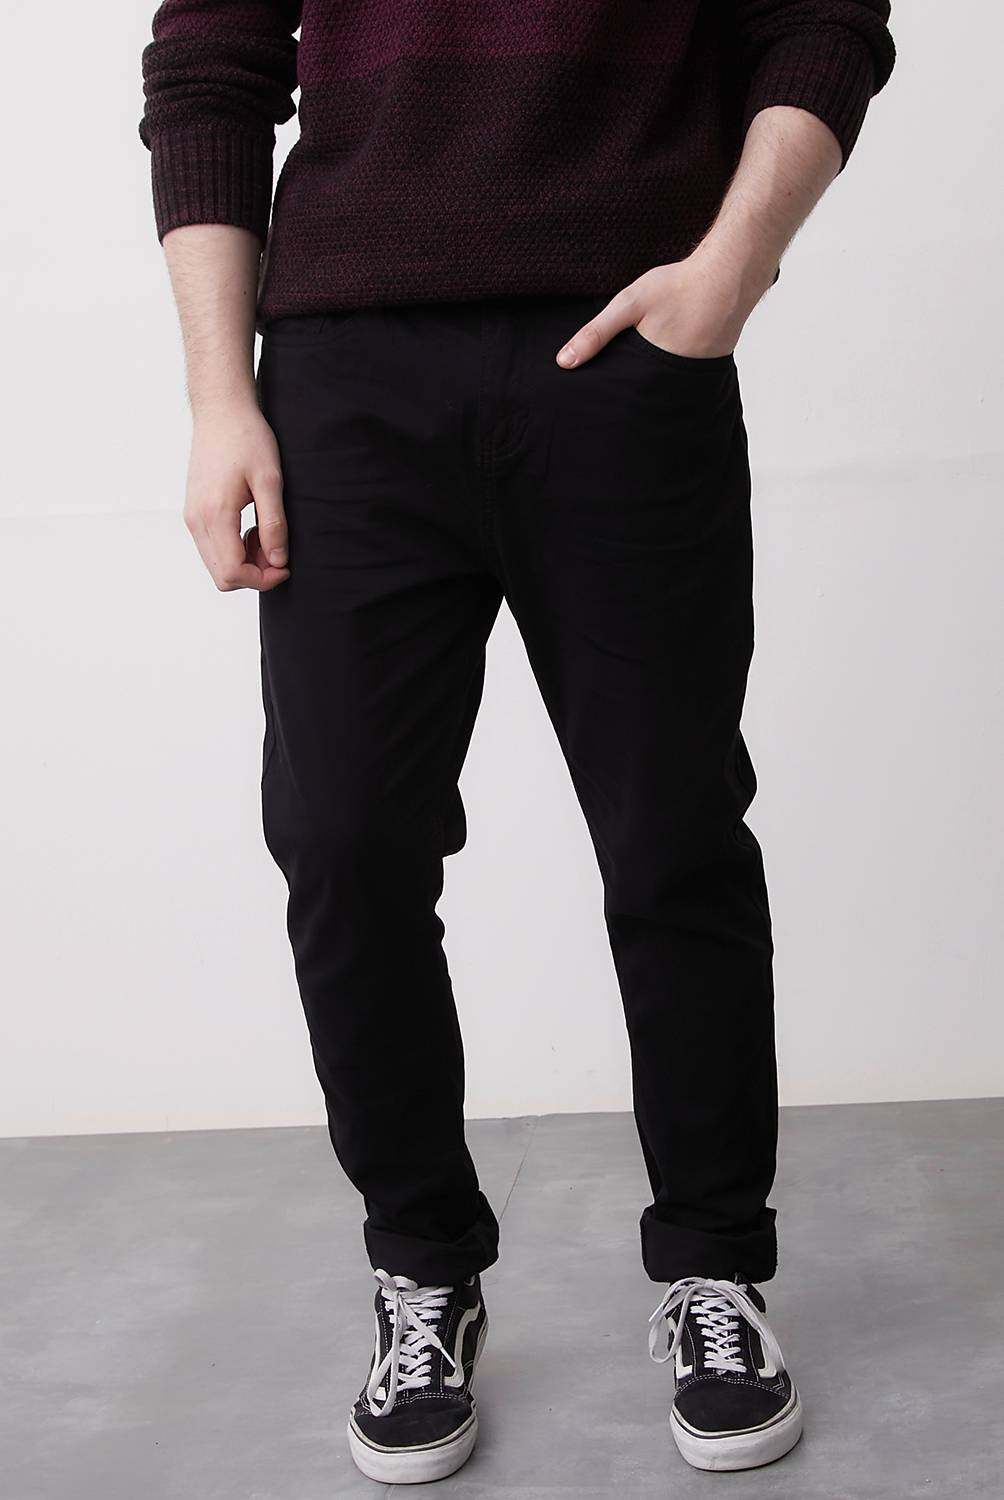 BEARCLIFF - Bearcliff Pantalón Super Skinny Fit Algodón Hombre